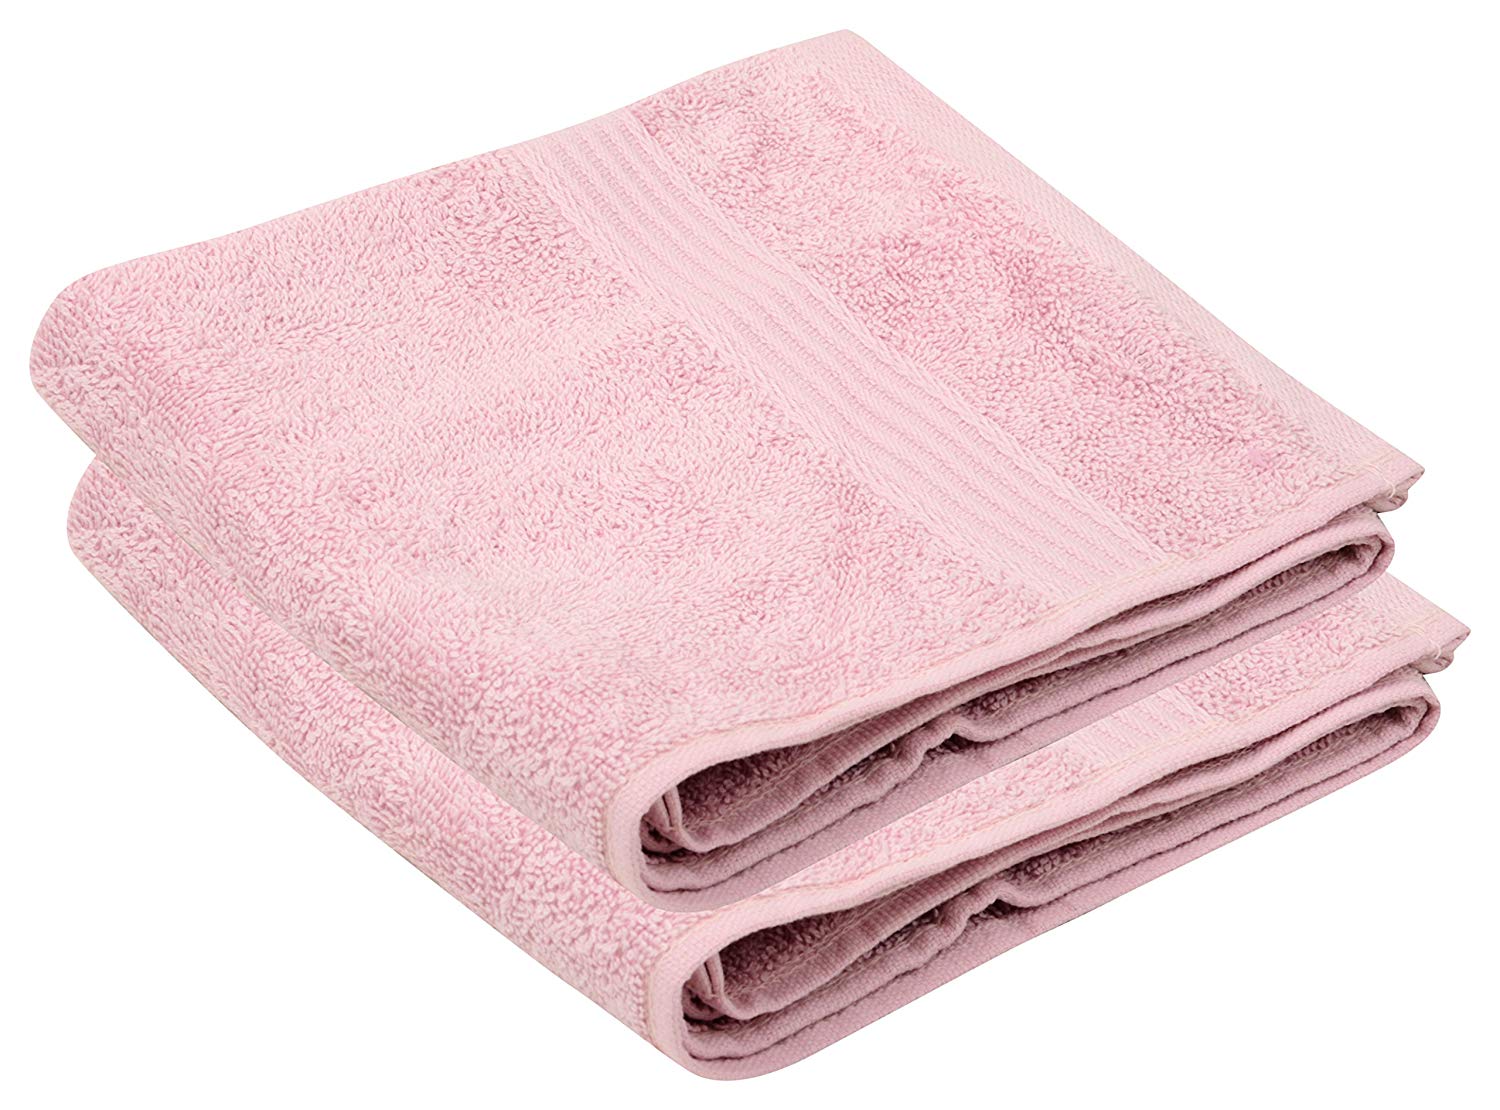 Toro Blu Toro Blu Large Size Face Towel 500 GSM for Men & Women,140x70cm (PINK) Toro Blu 899.00 Toro Blu 2 Toro Blu Large Size Face Towel 500 GSM for Men & Women,140x70cm (PINK)